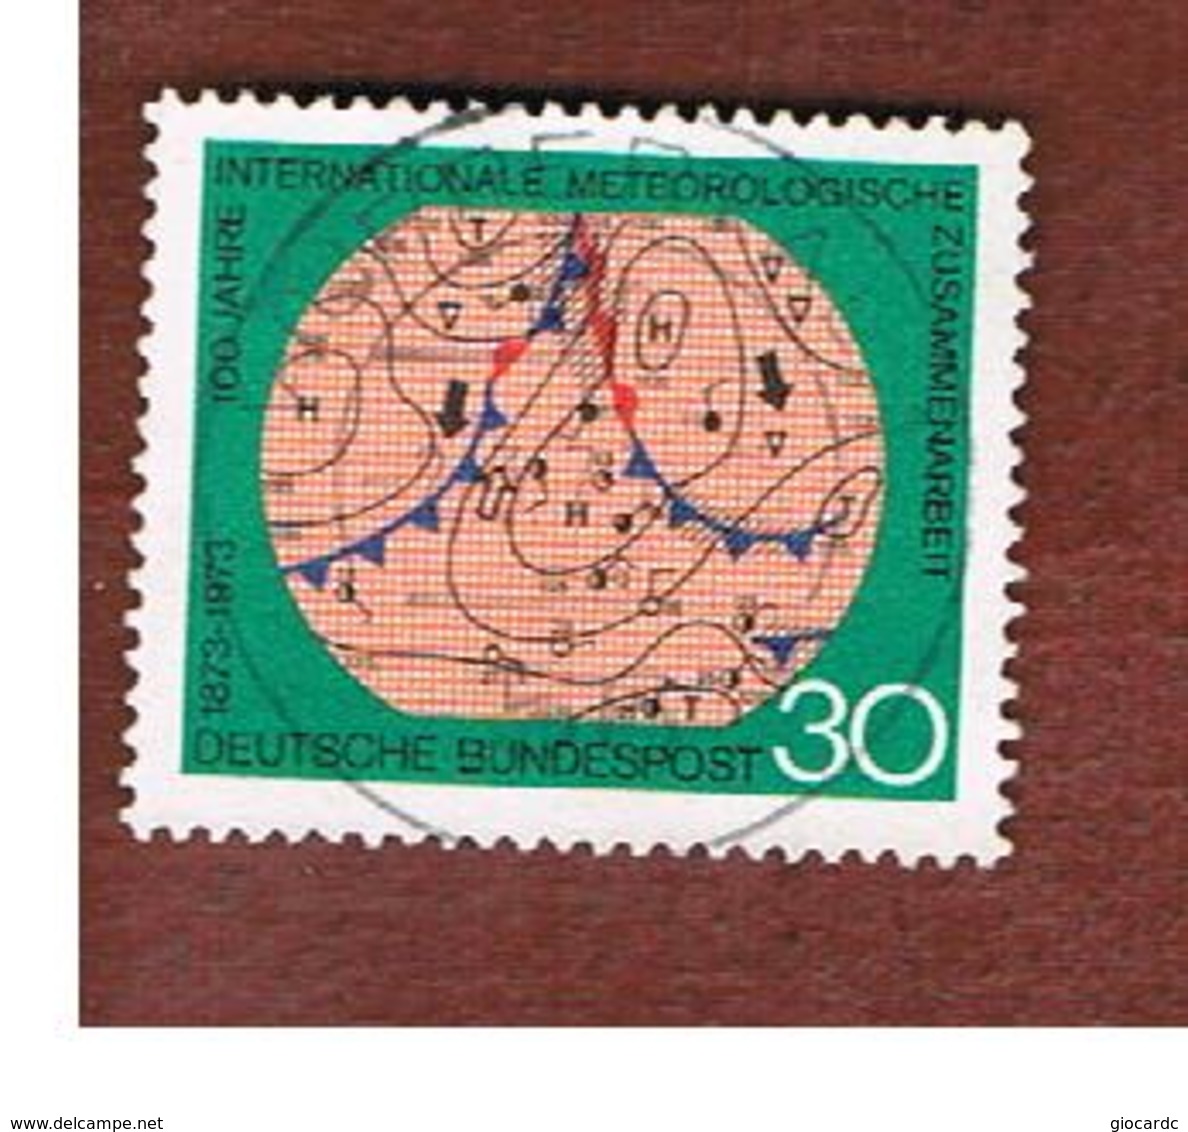 GERMANIA (GERMANY) - SG 1654  - 1973  INT. METEOROLOGICAL ORGANIZATION   -  USED - Oblitérés